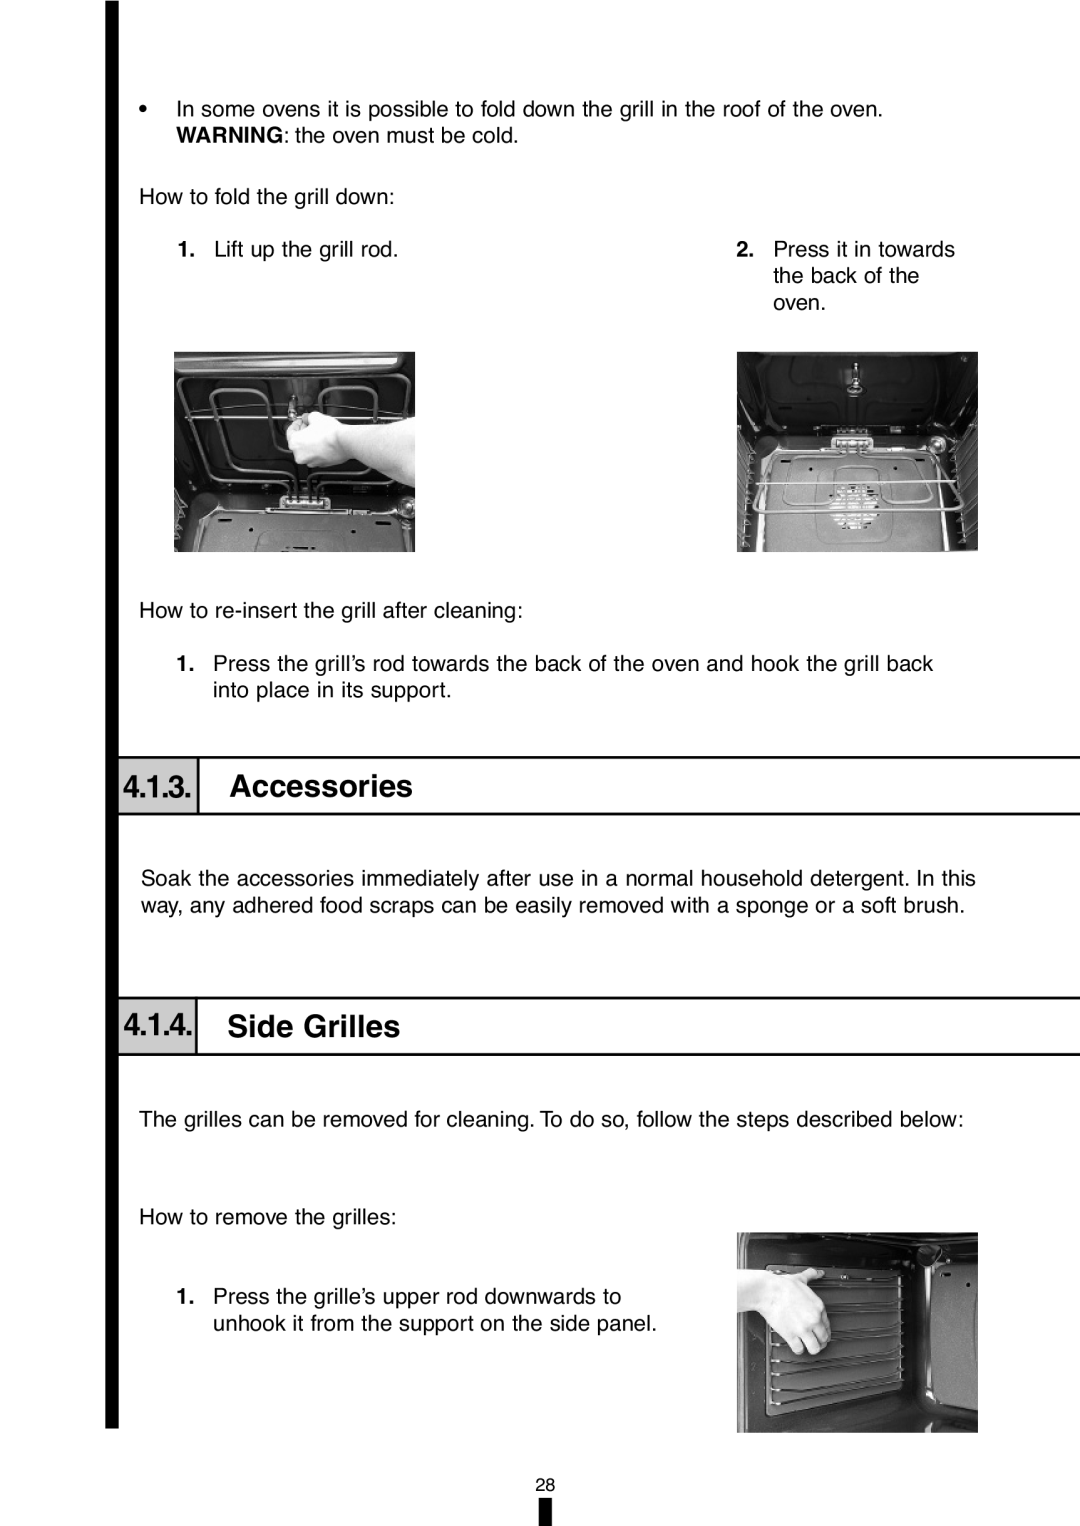 Fagor America 5HA-196X manual 4.1.3, Accessories, 4.1.4, Side Grilles 